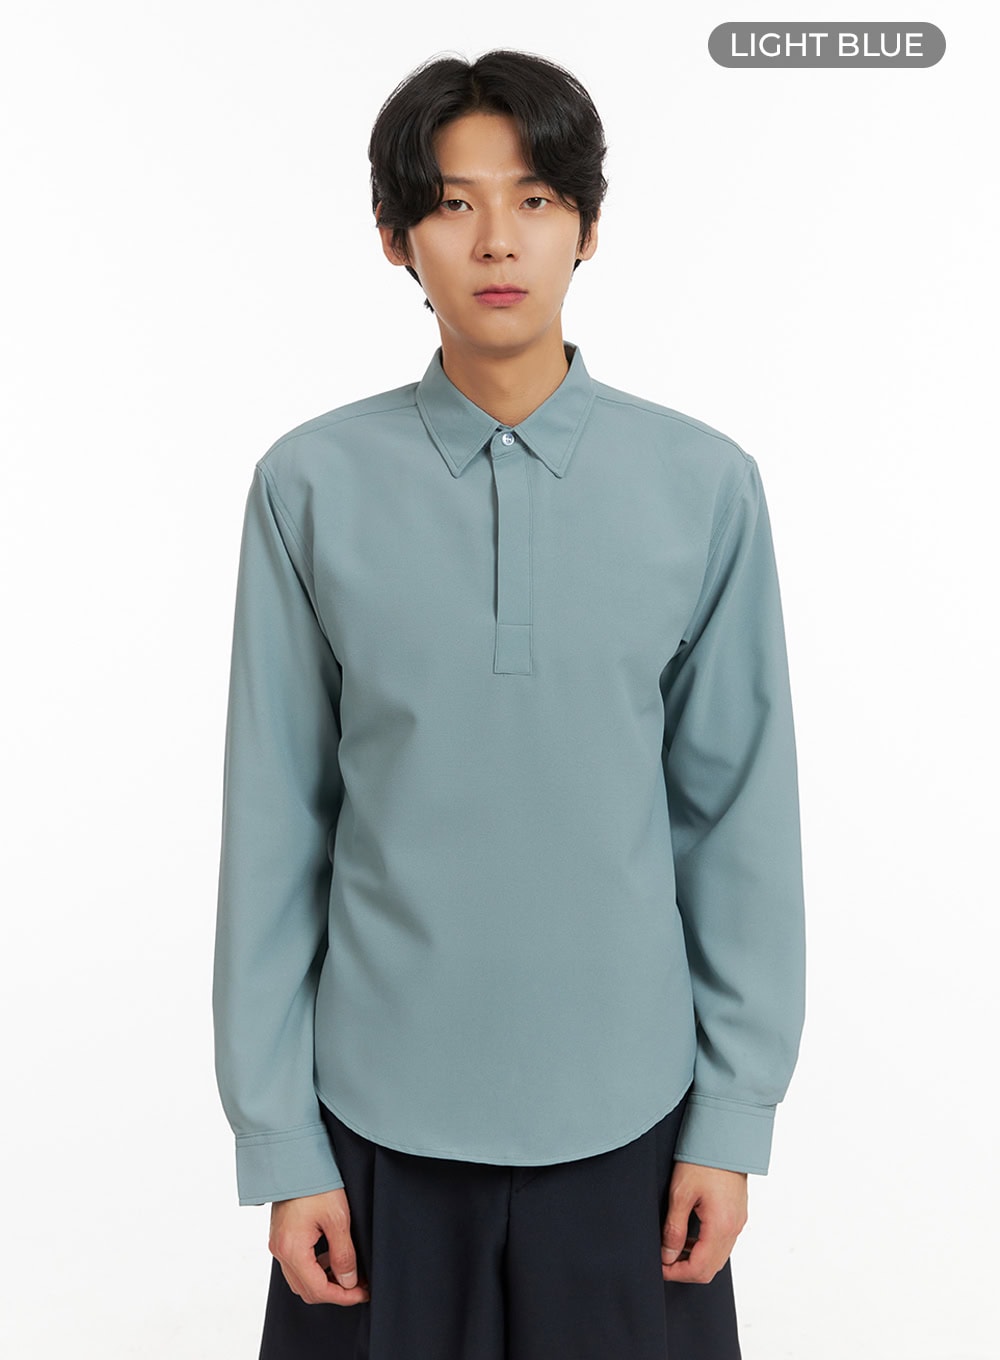 mens-collared-long-sleeve-shirt-iy416 / Light blue